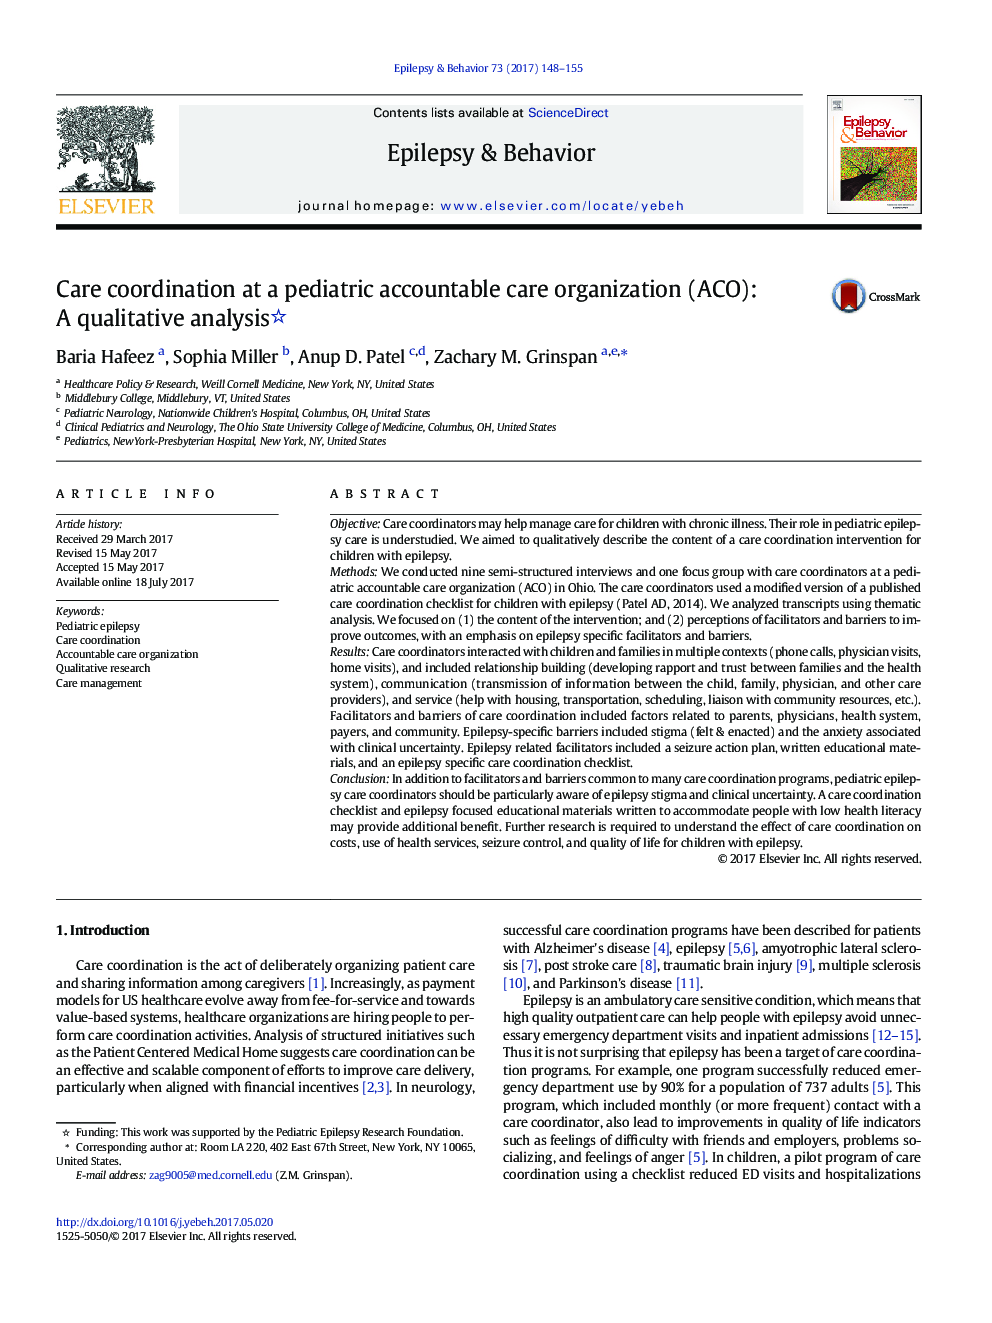 Care coordination at a pediatric accountable care organization (ACO): A qualitative analysis